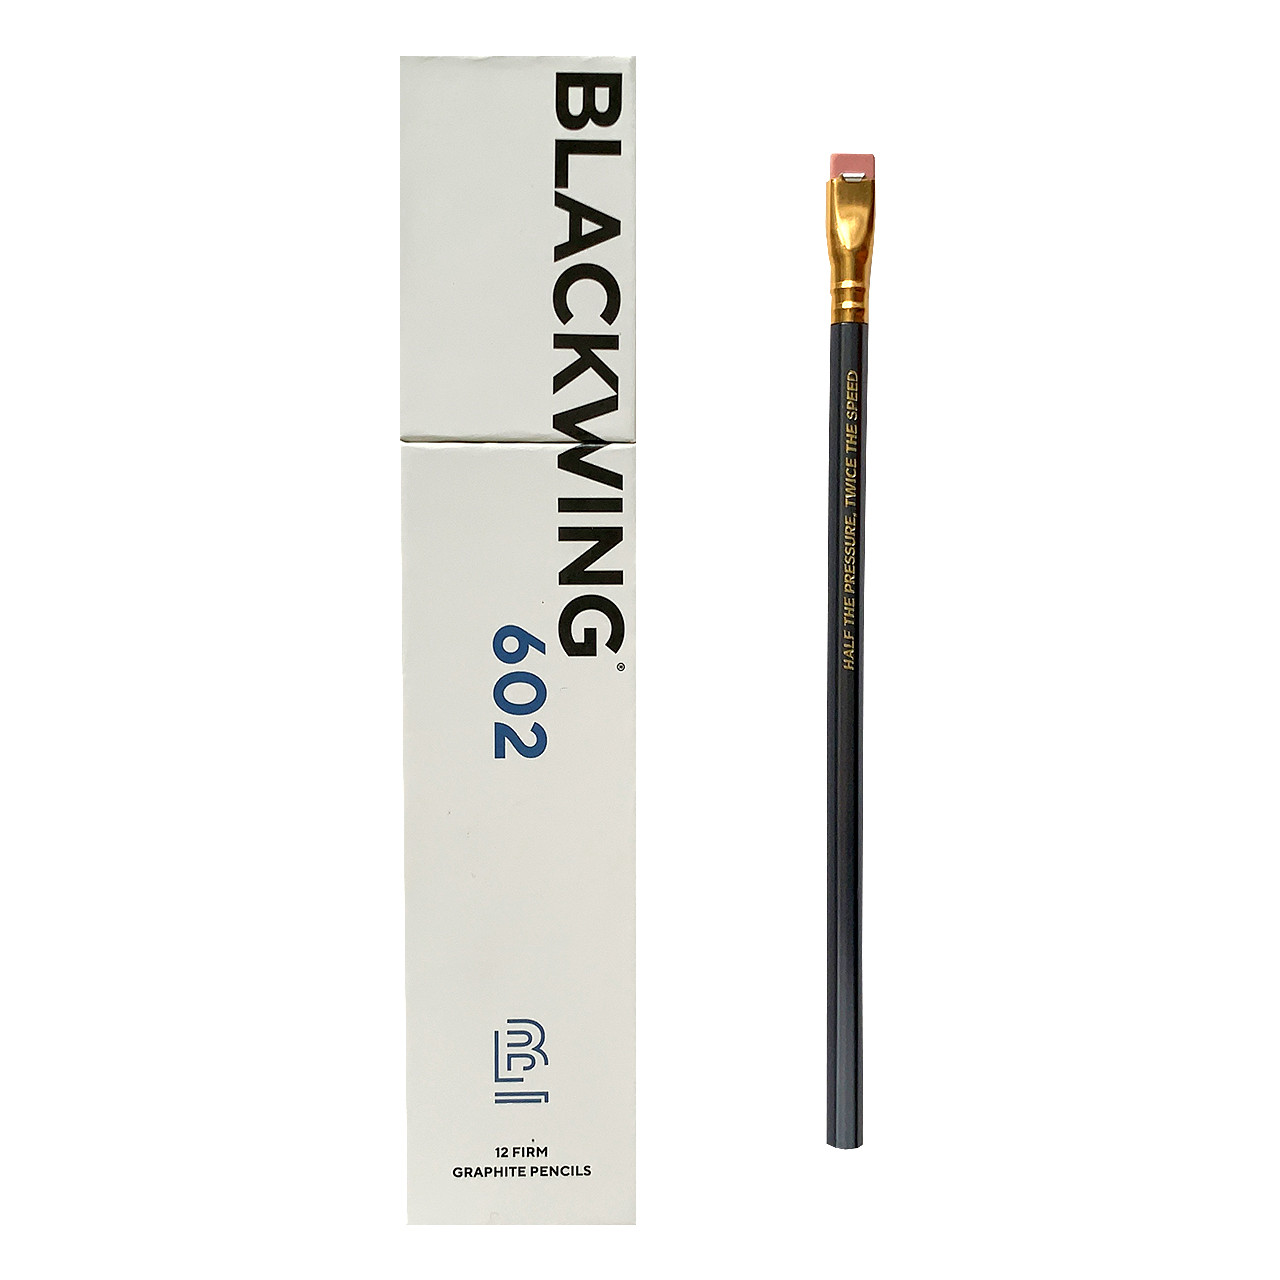 Blackwing 602 Pencil Set of 4